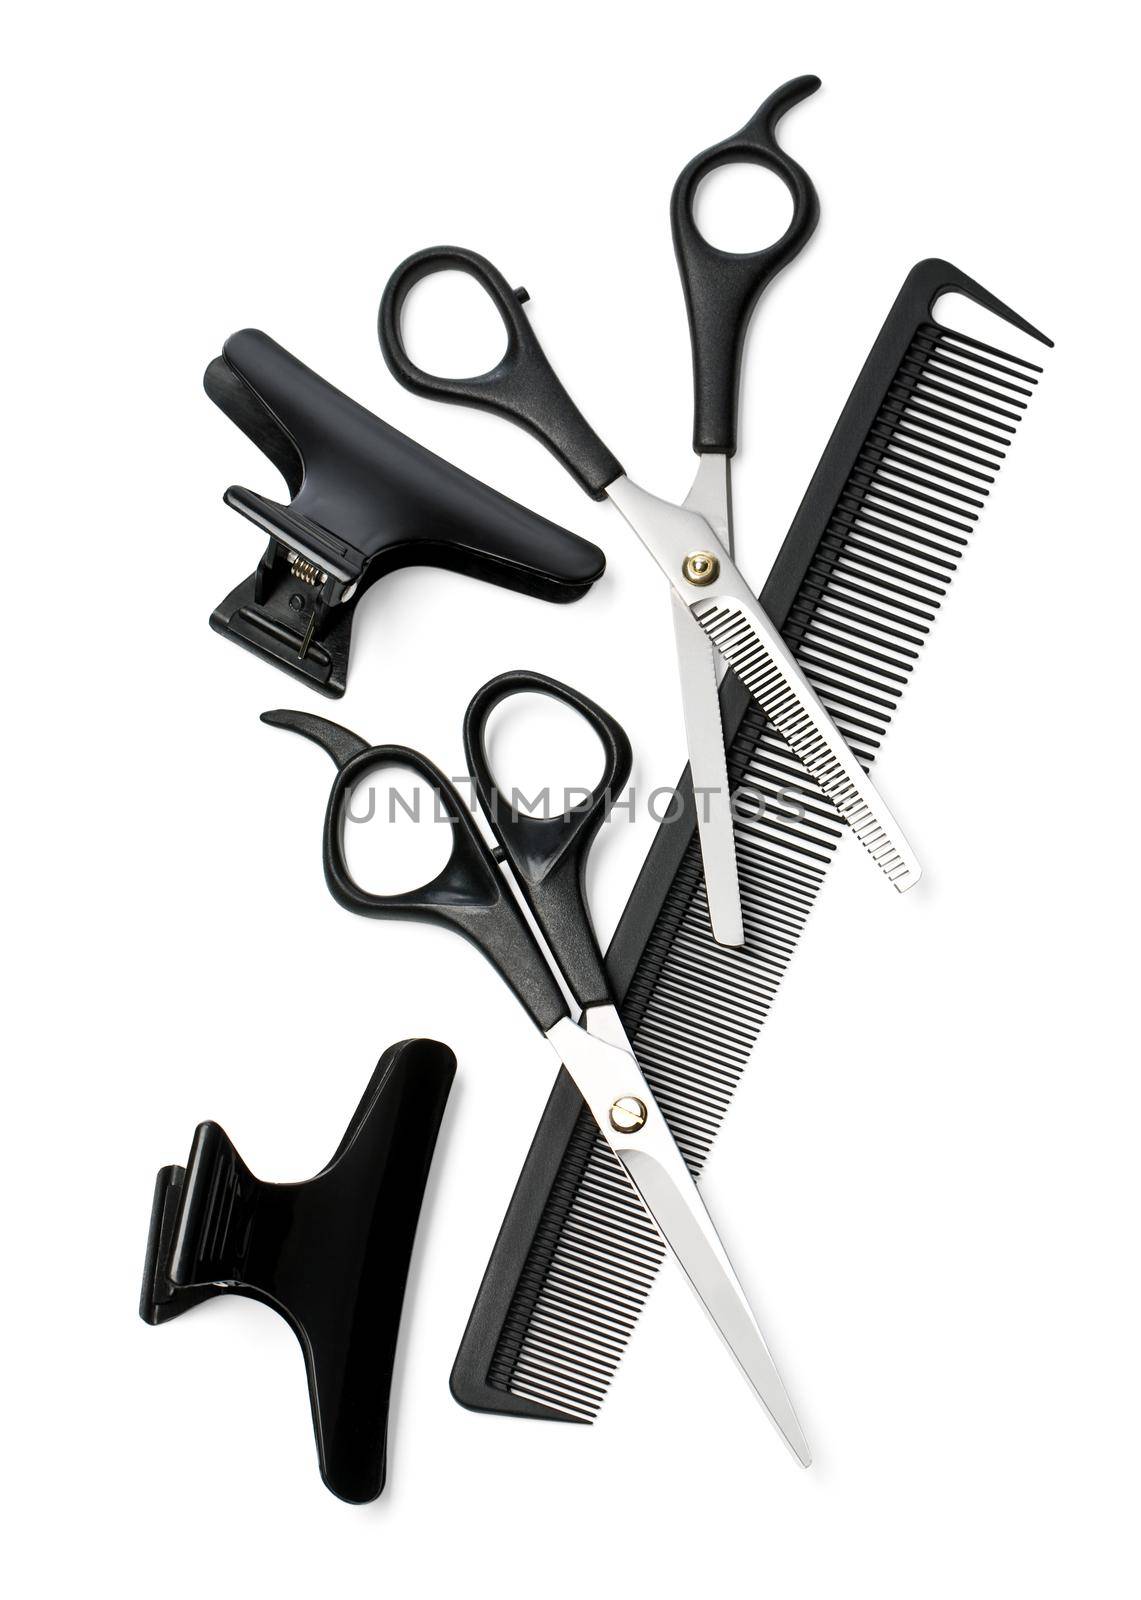 Scissors, Thinning shear by kornienko